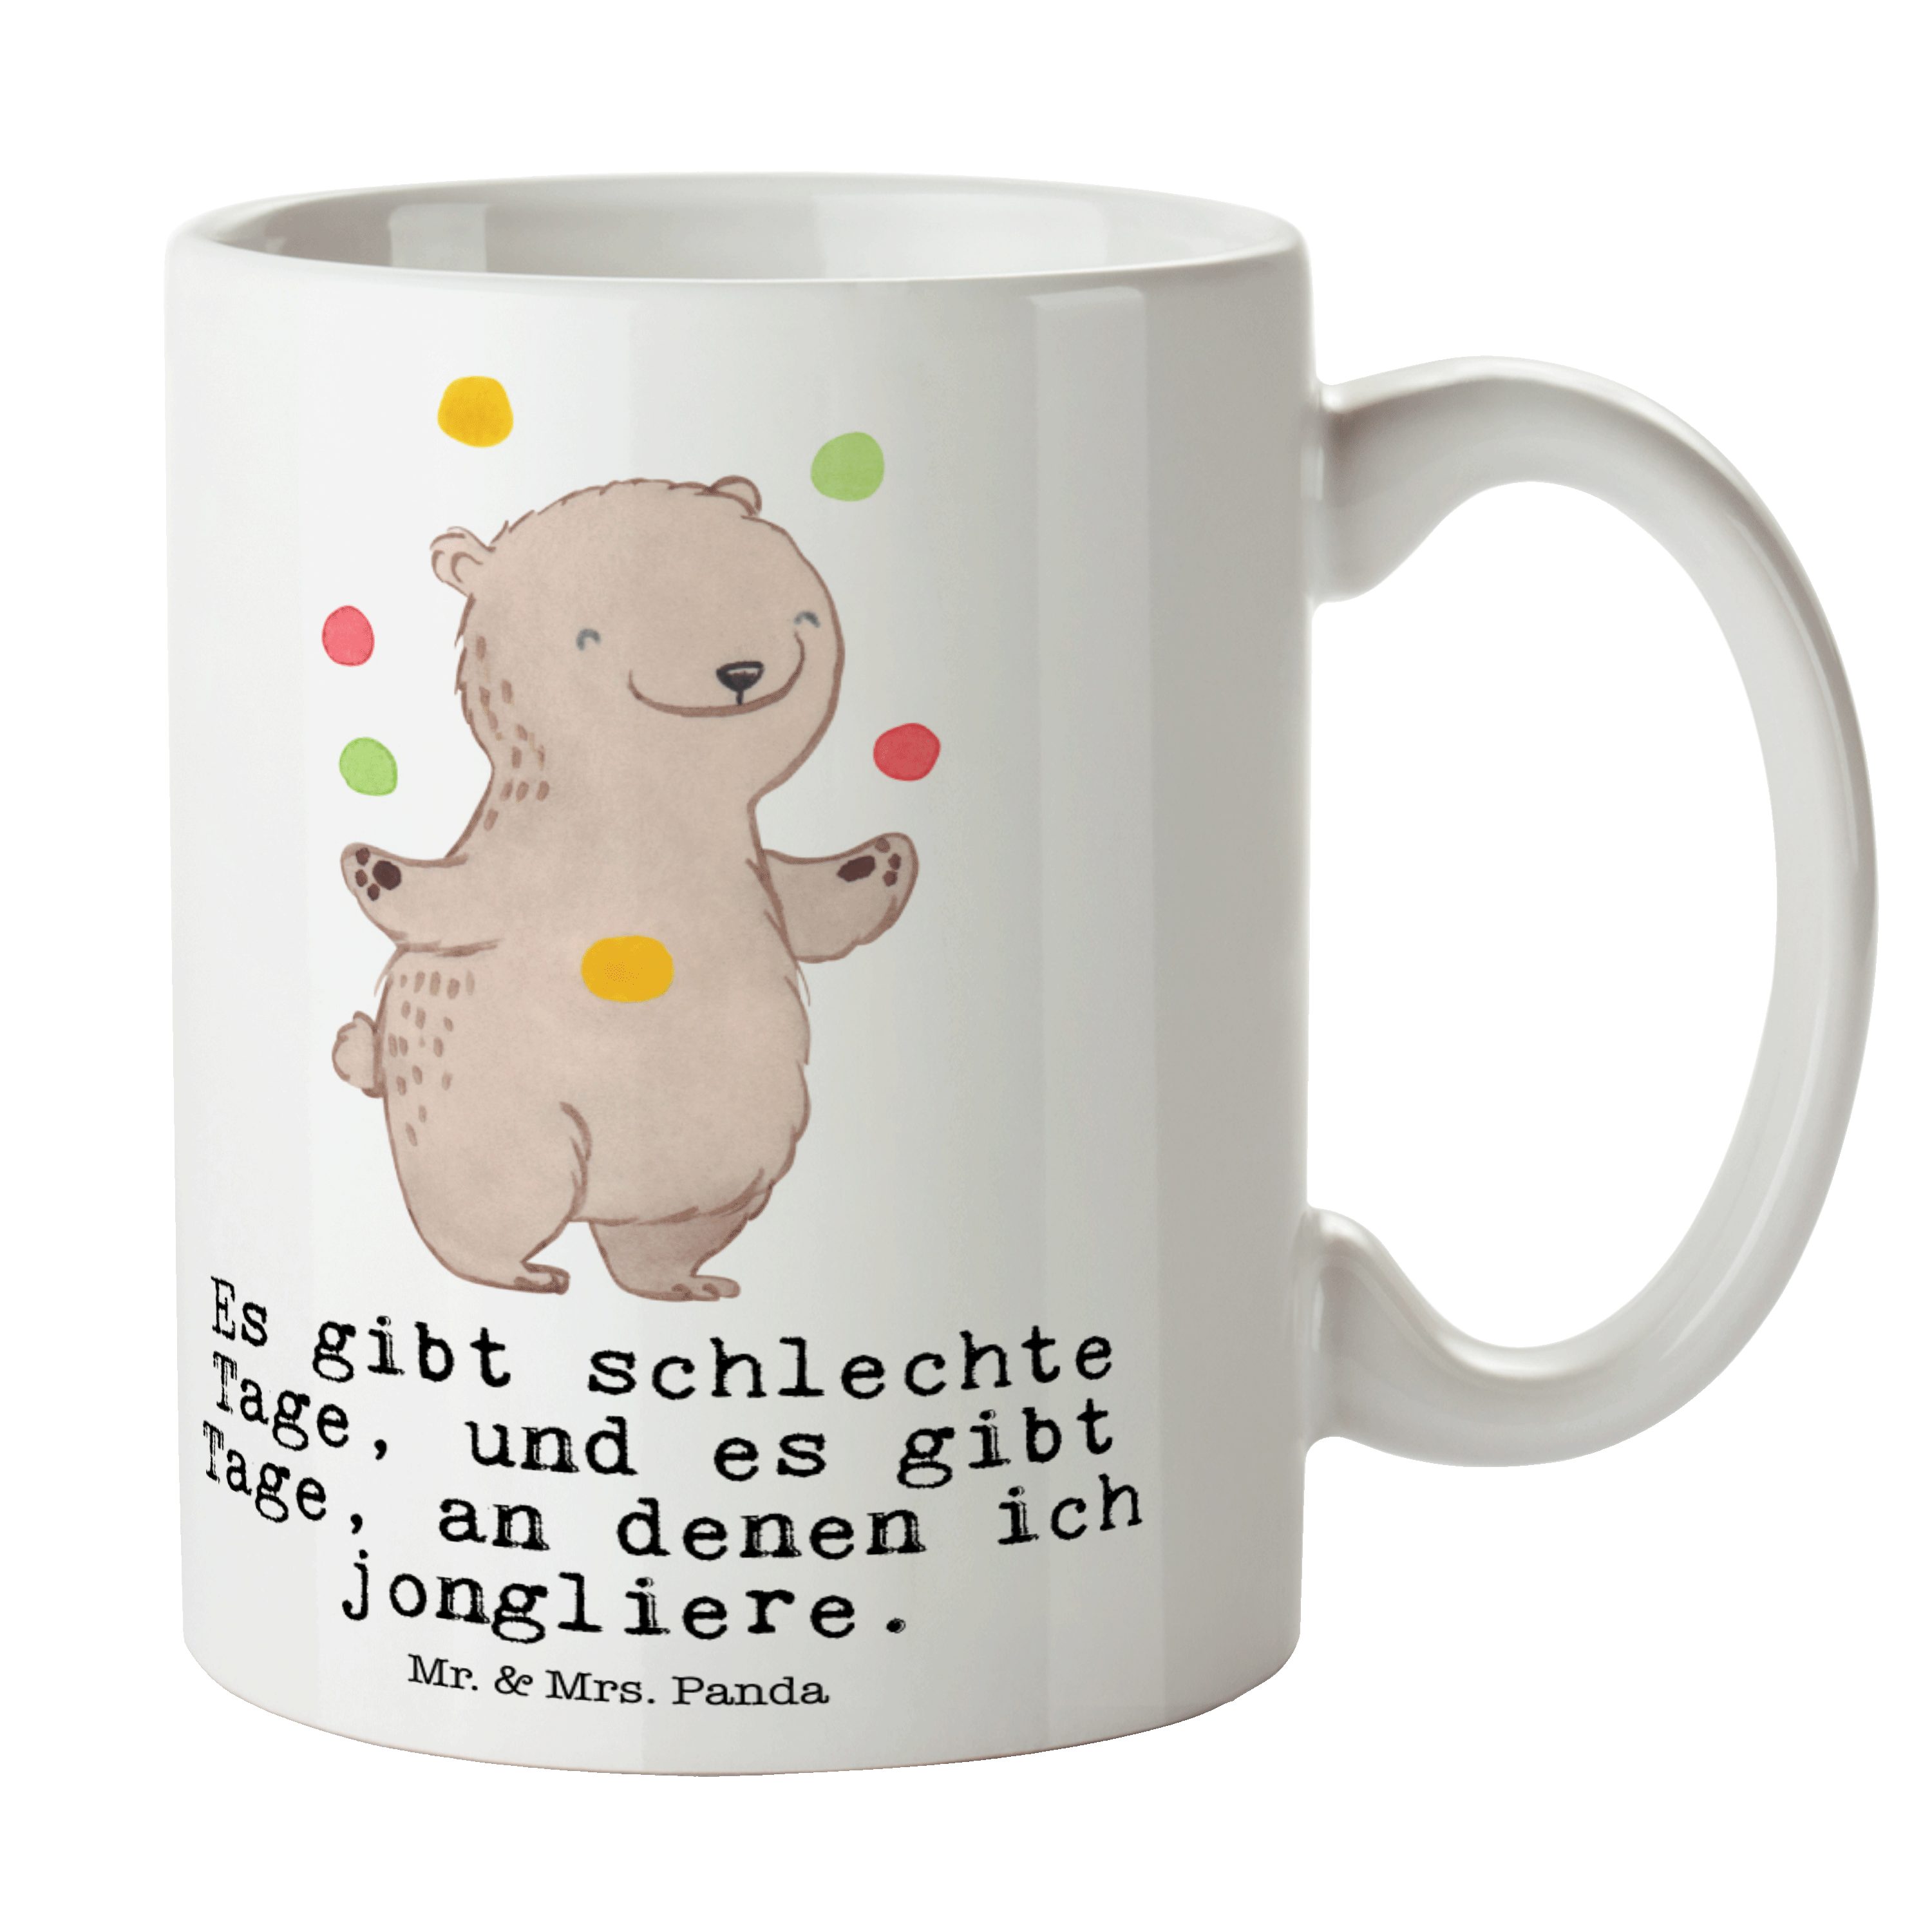 Mr. & - Tasse Tage Keramik Teetasse, Weiß Panda Bär - Jonglieren Mrs. Kaffee, Keramiktasse, Geschenk